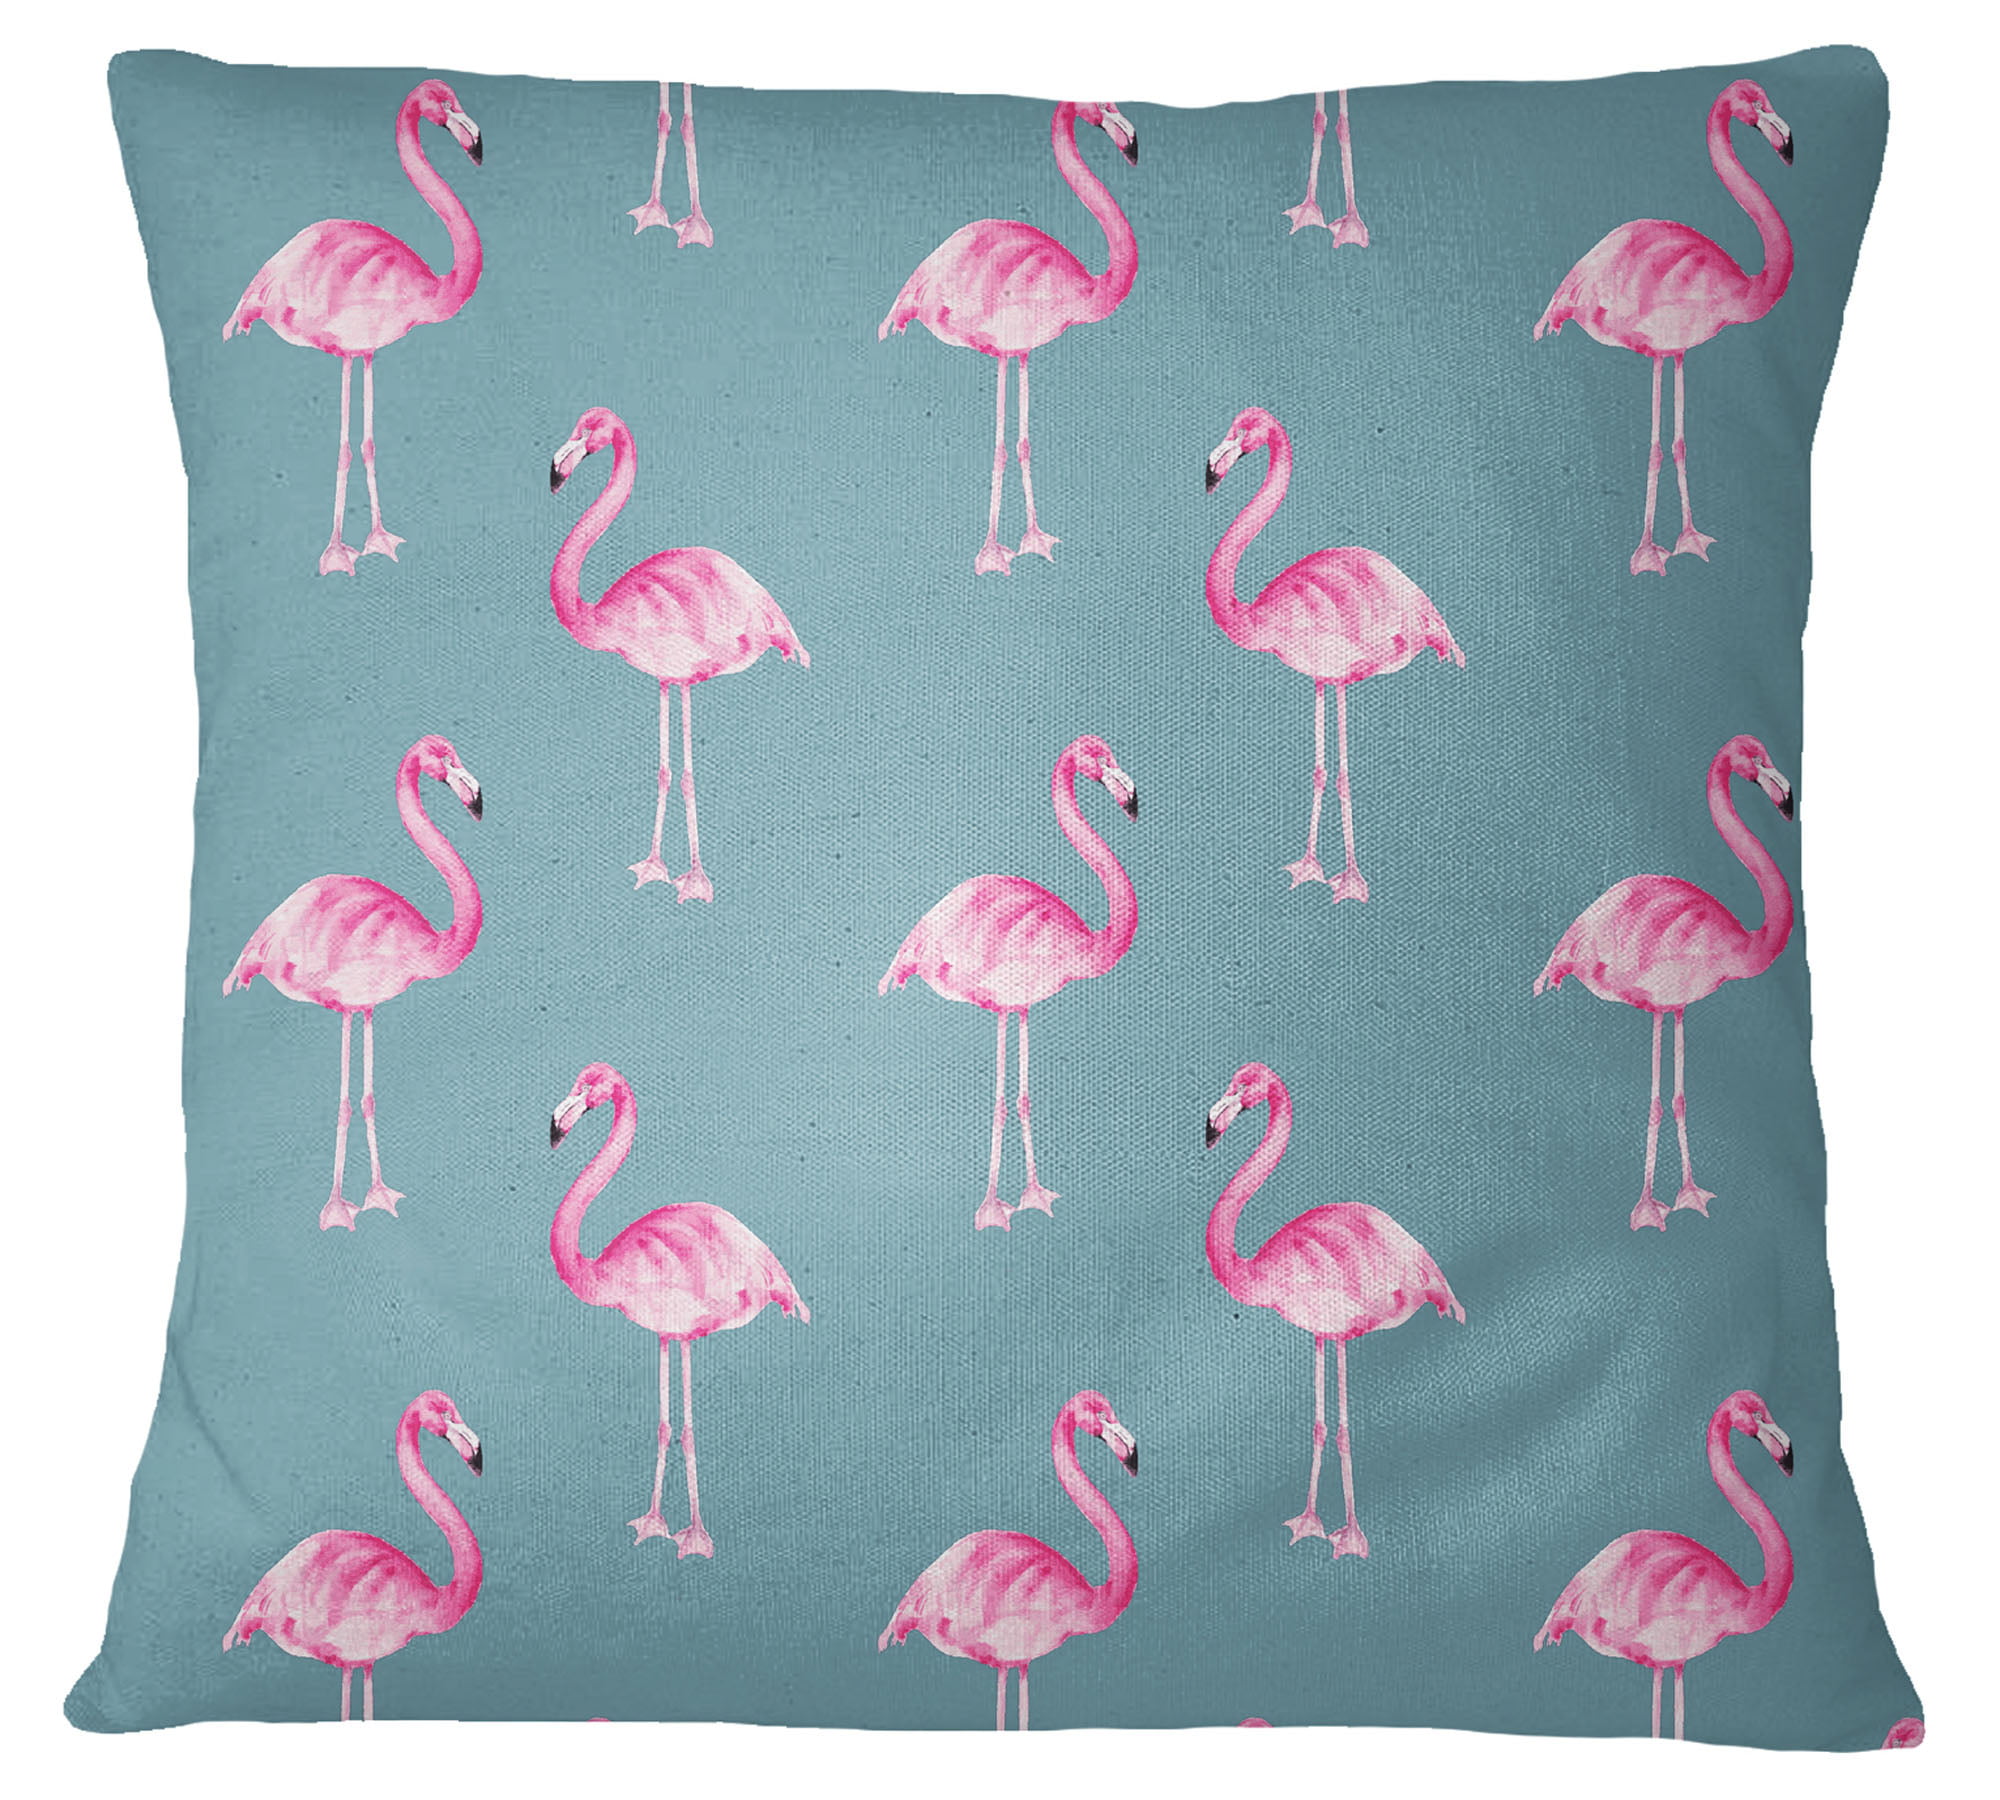 S4Sassy Decorative Flamingo Floral Print Pillow Case Square Cushion Cover Throw